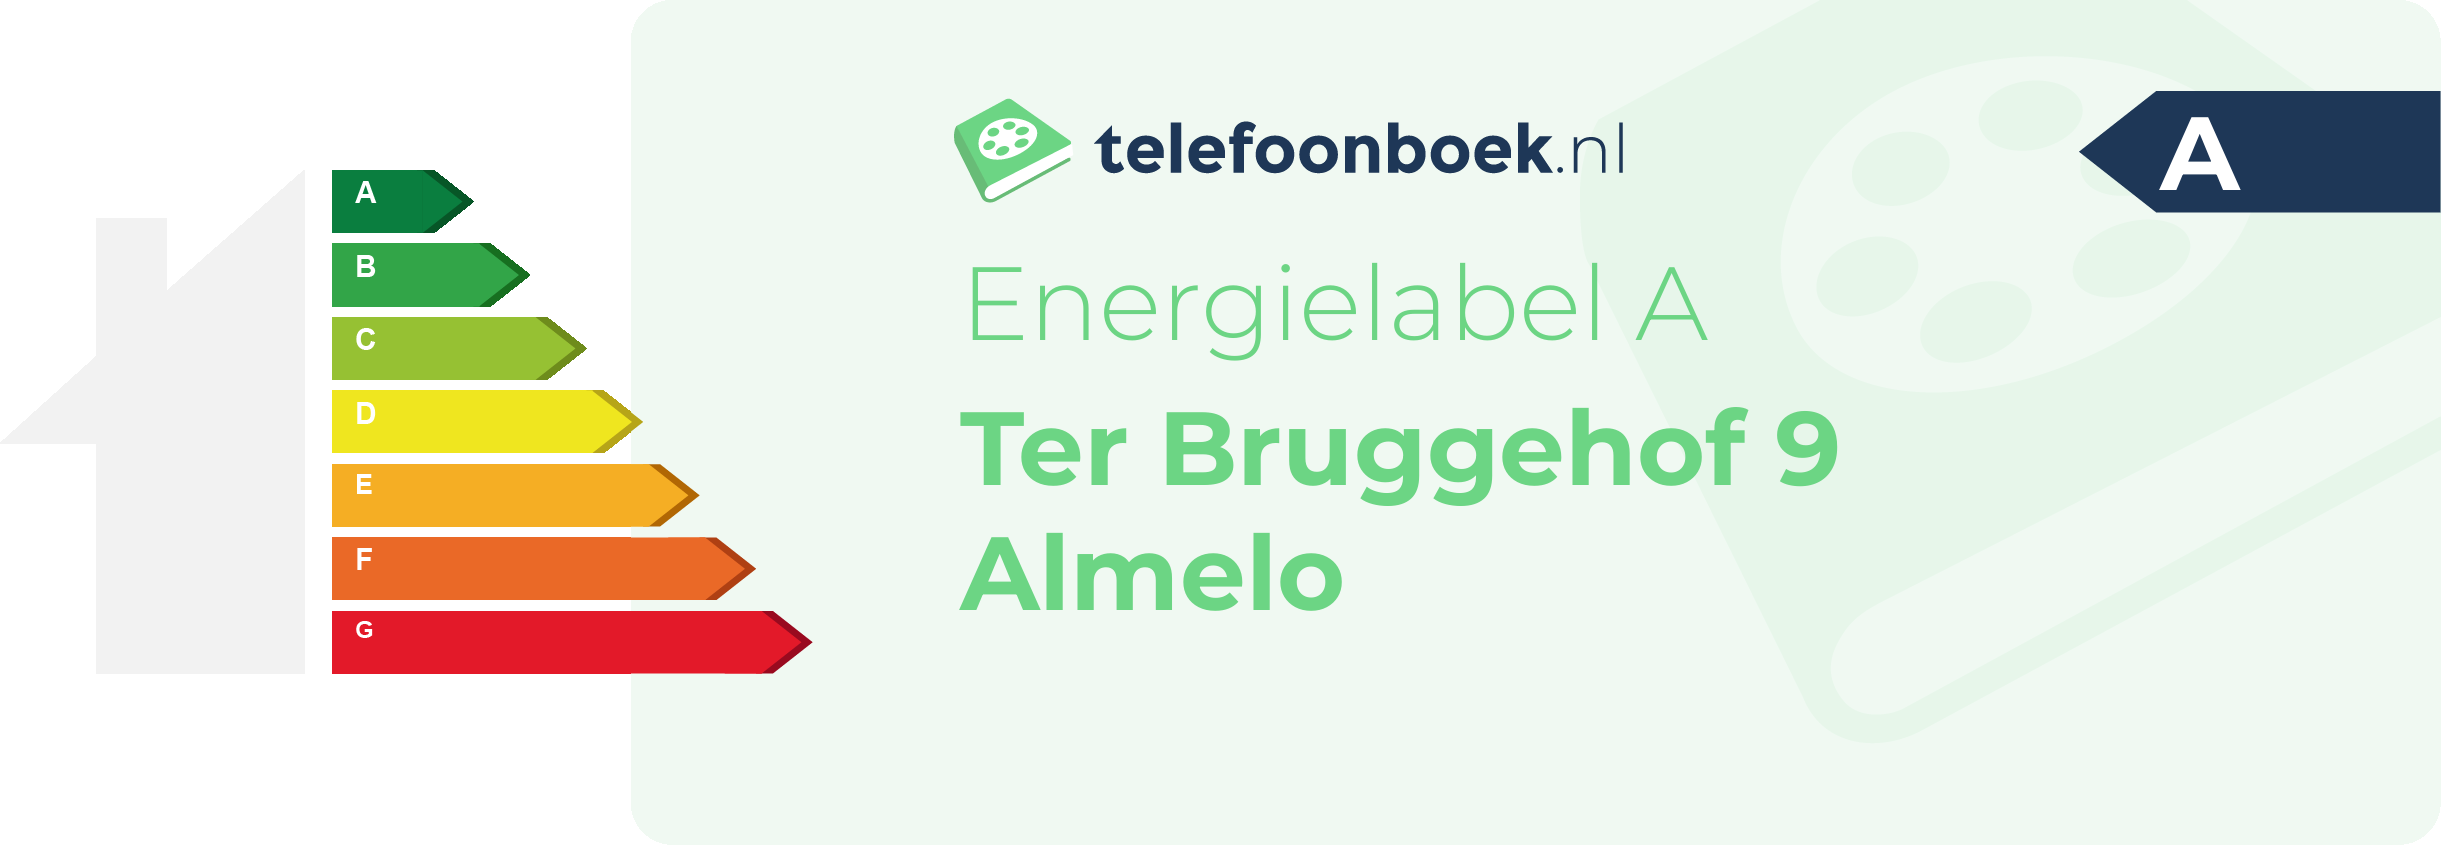 Energielabel Ter Bruggehof 9 Almelo